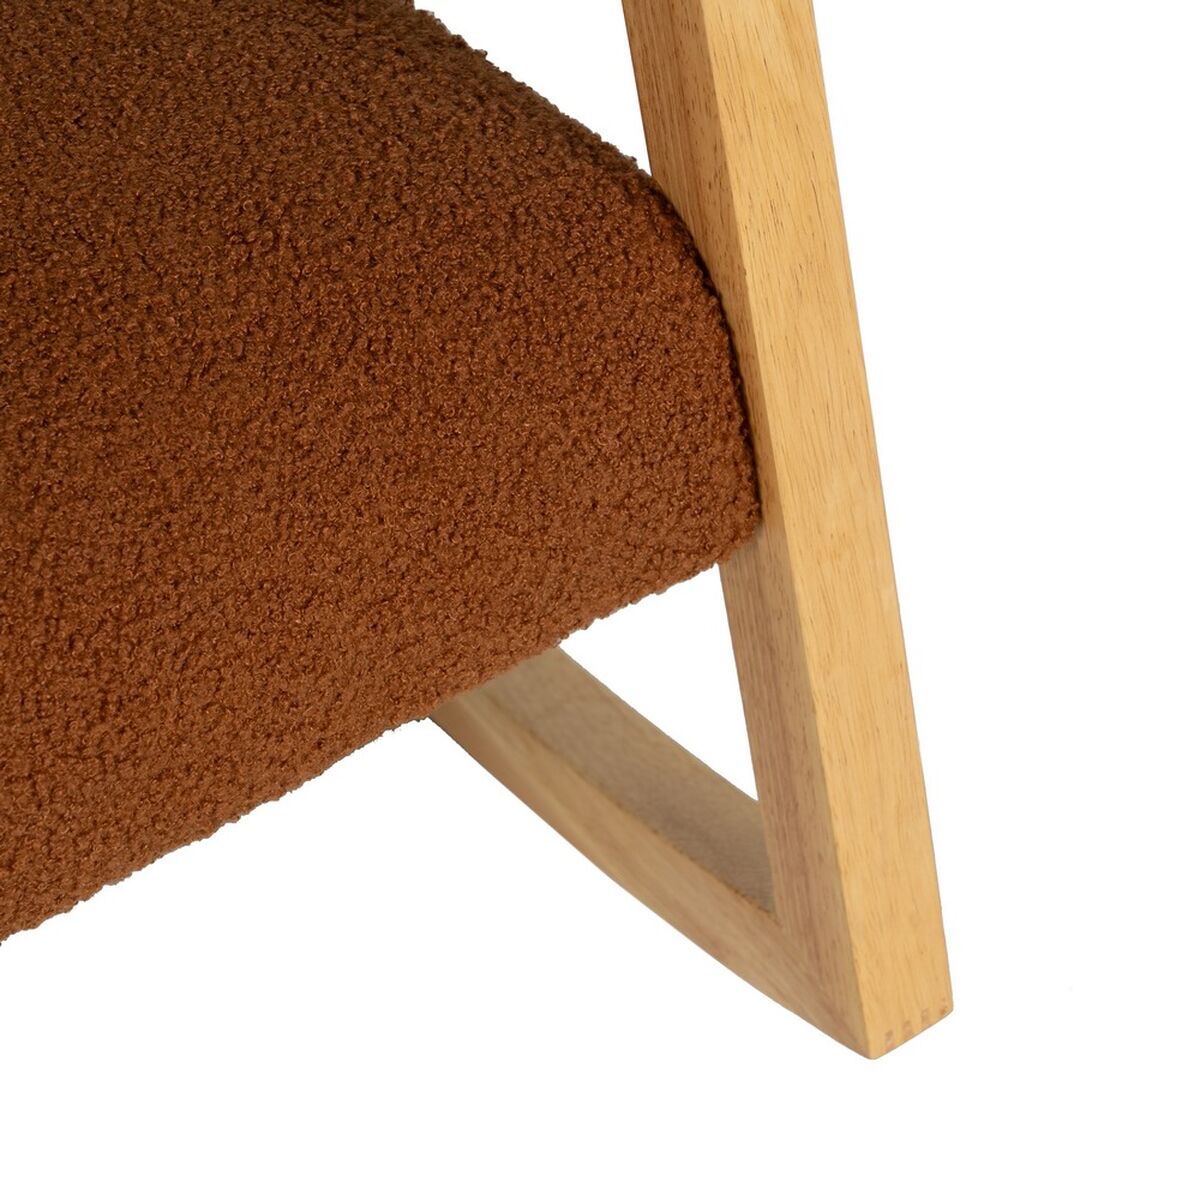 Rocking Chair Brown Beige Rubber wood Fabric 60 x 83 x 72 cm